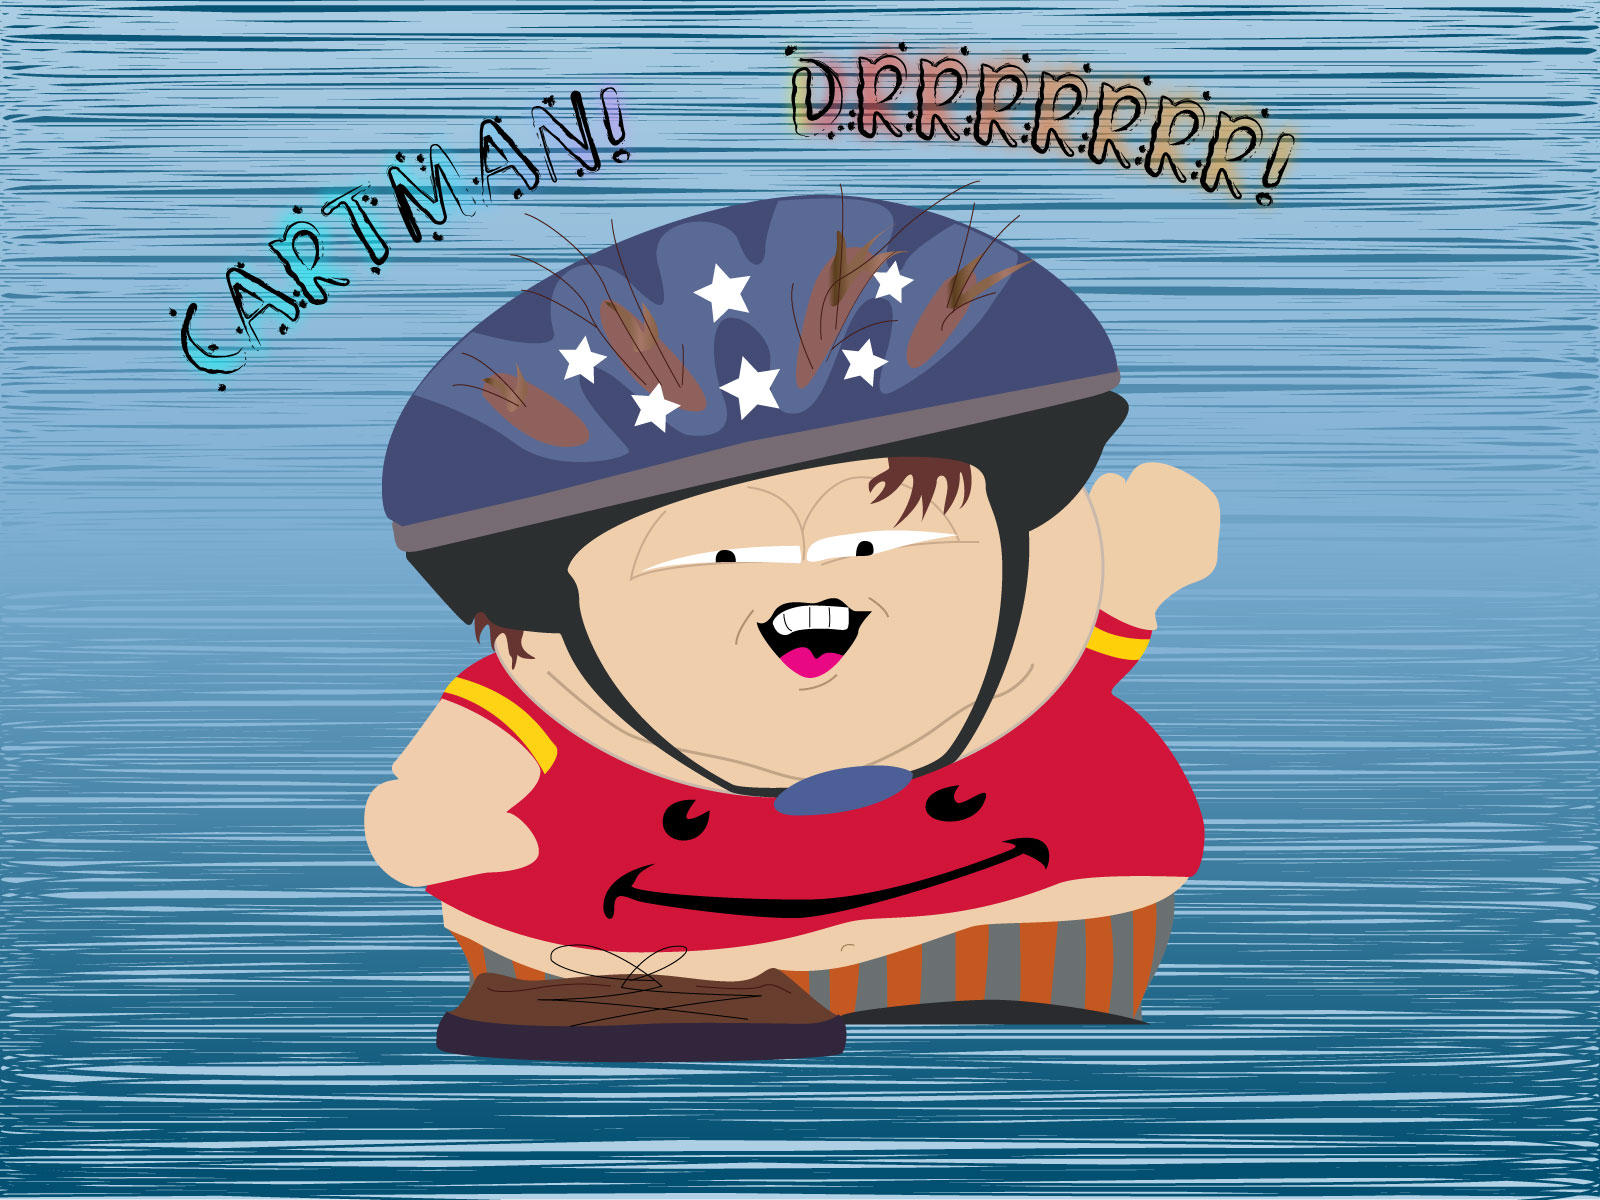 South Park Paralympics